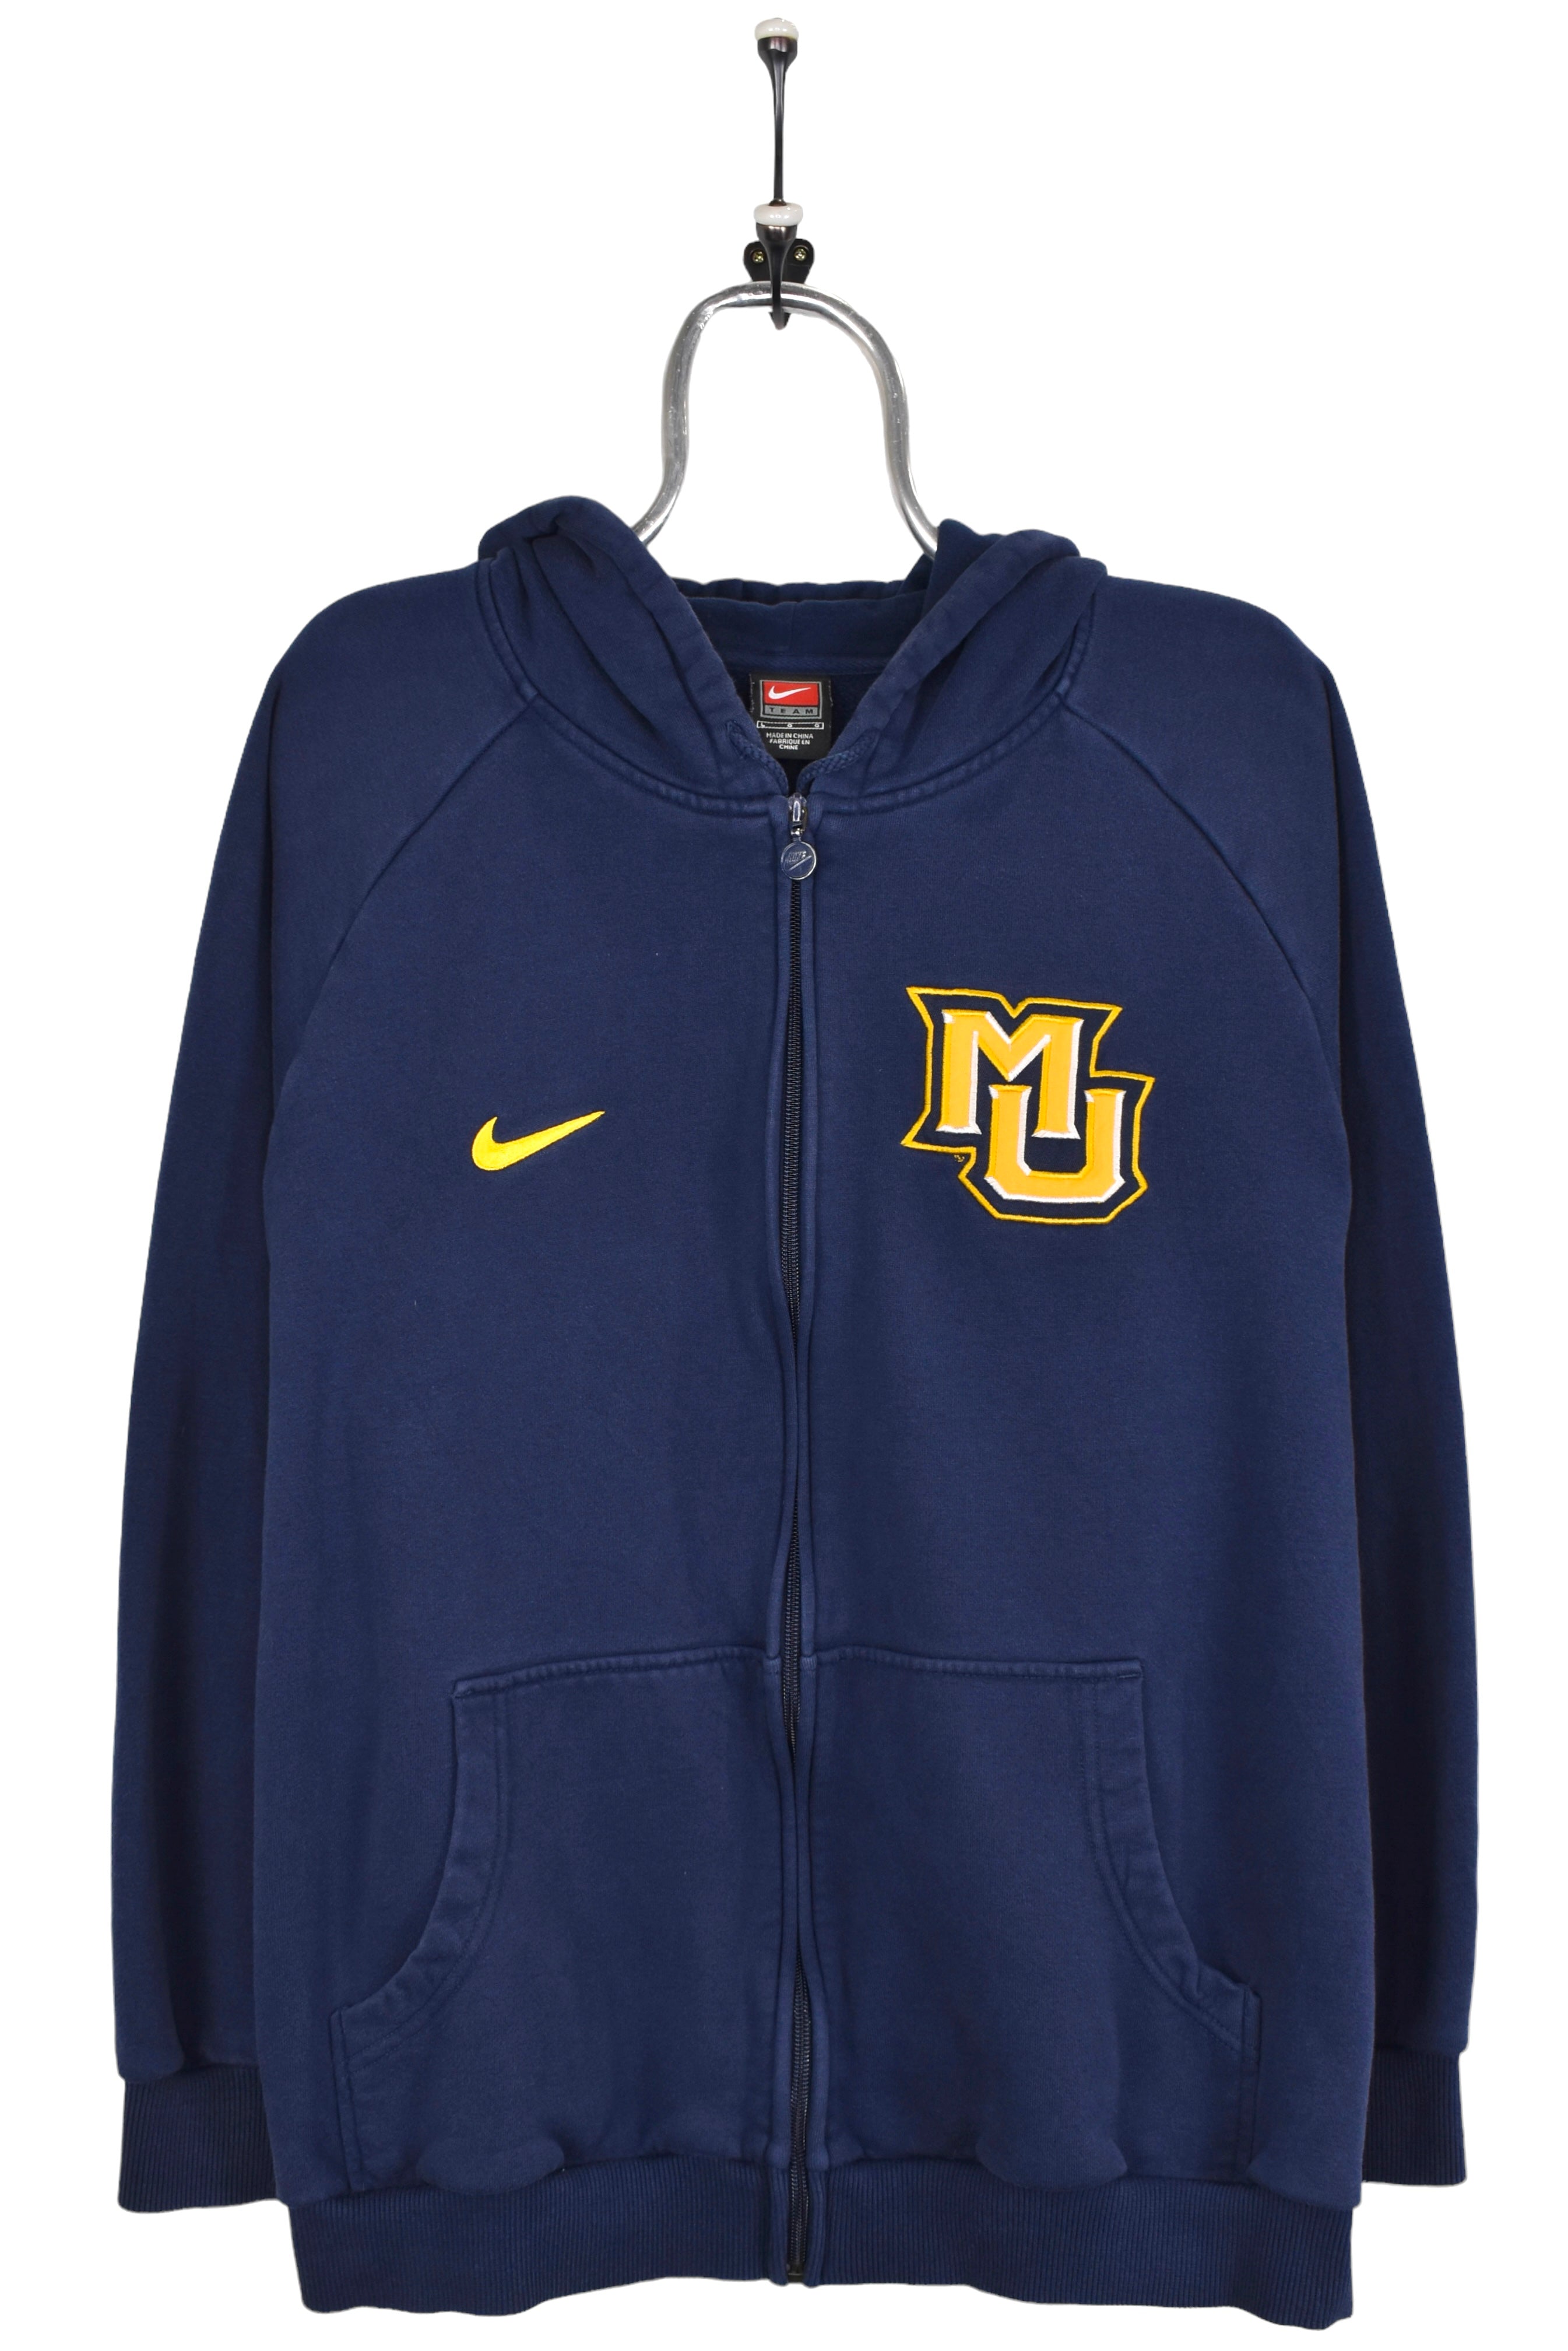 Vintage Marquette University hoodie, Blue Nike embroidered sweatshirt - XL